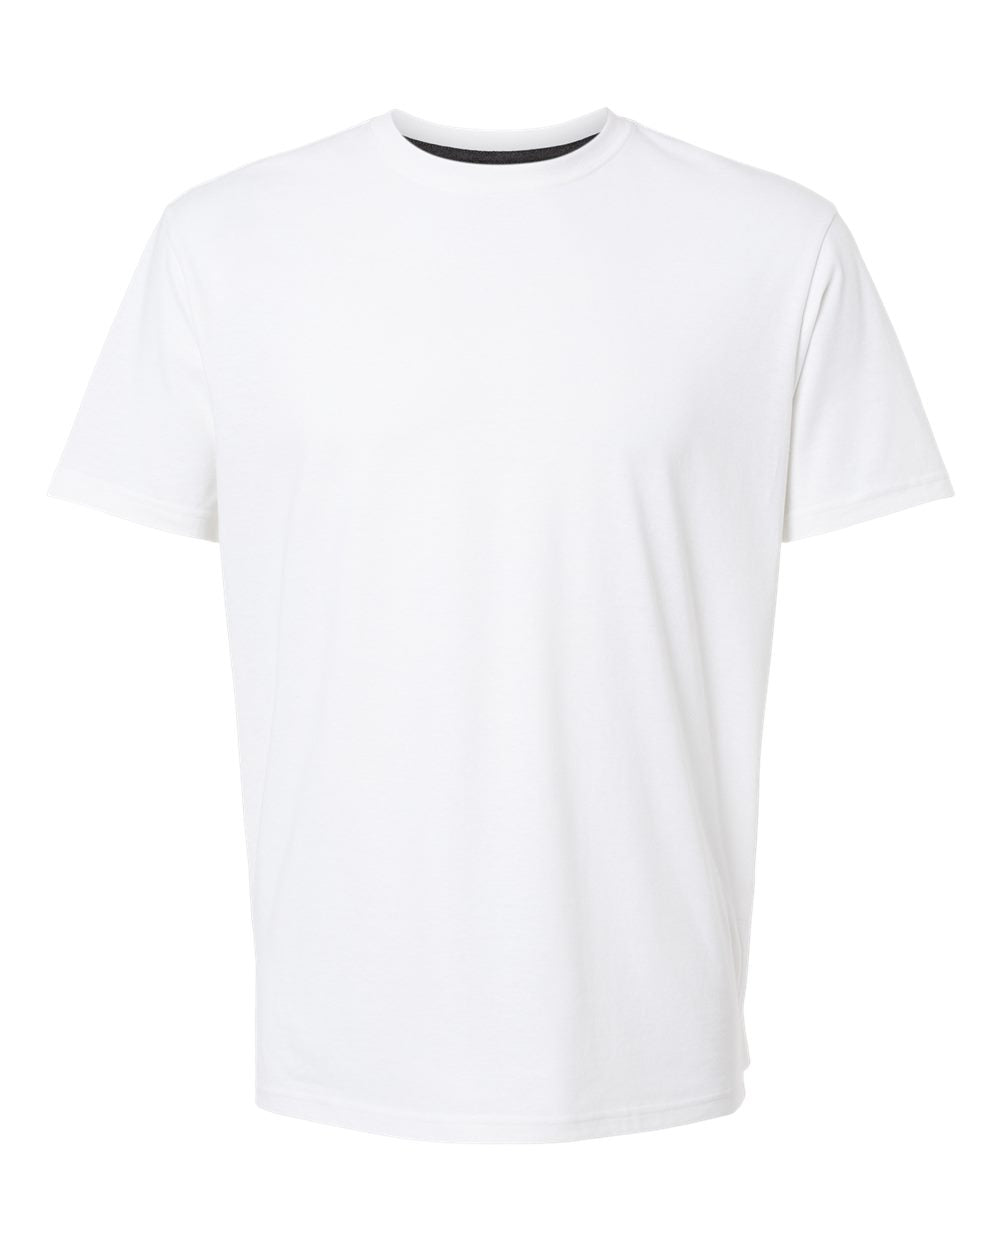 Customizable kastlfel recycledsoft t-shirt white